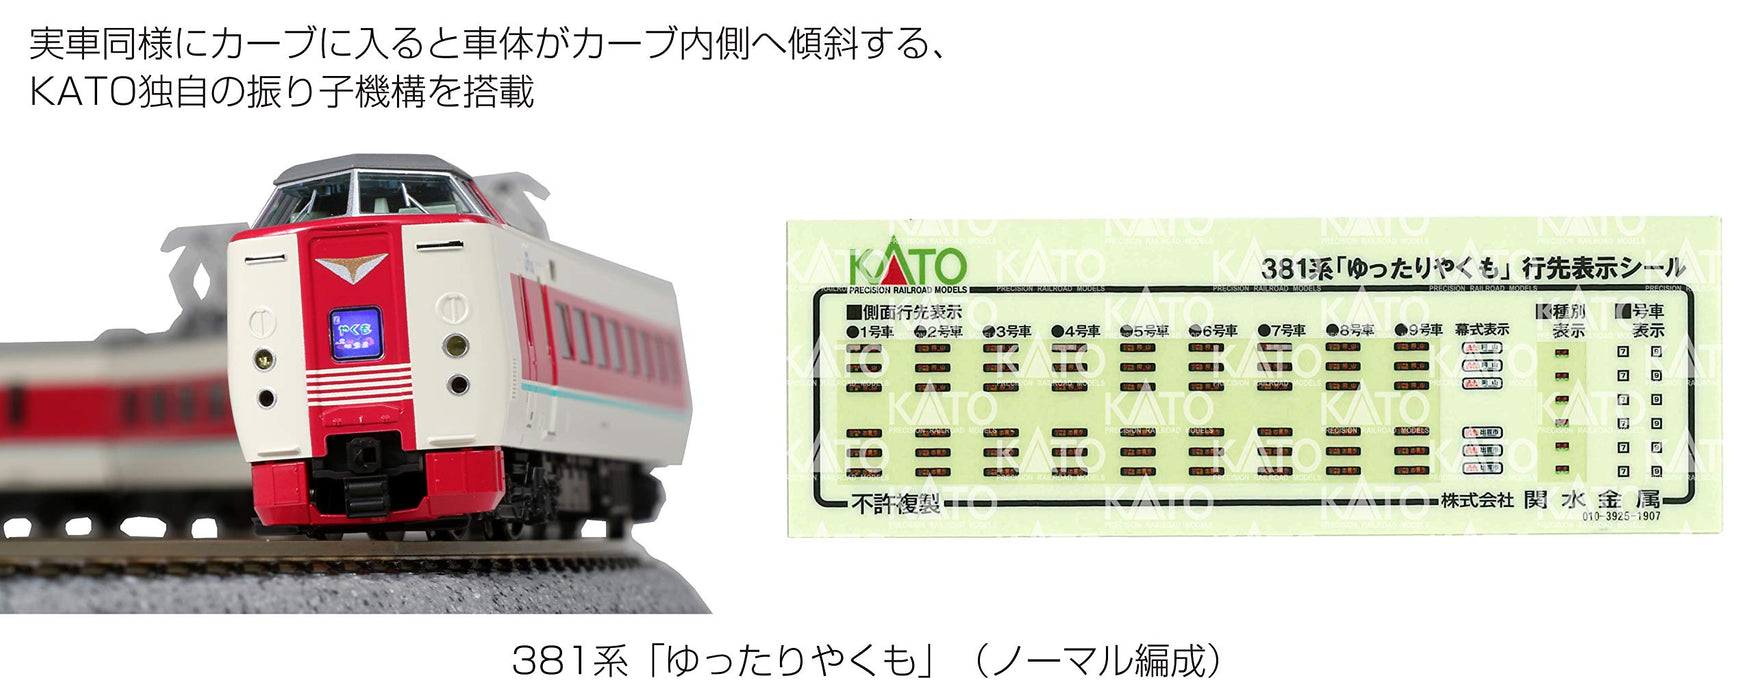 Kato N Gauge 381 Series Yukuyaku Yakumo Coffret de 7 voitures 10-1452 Train miniature